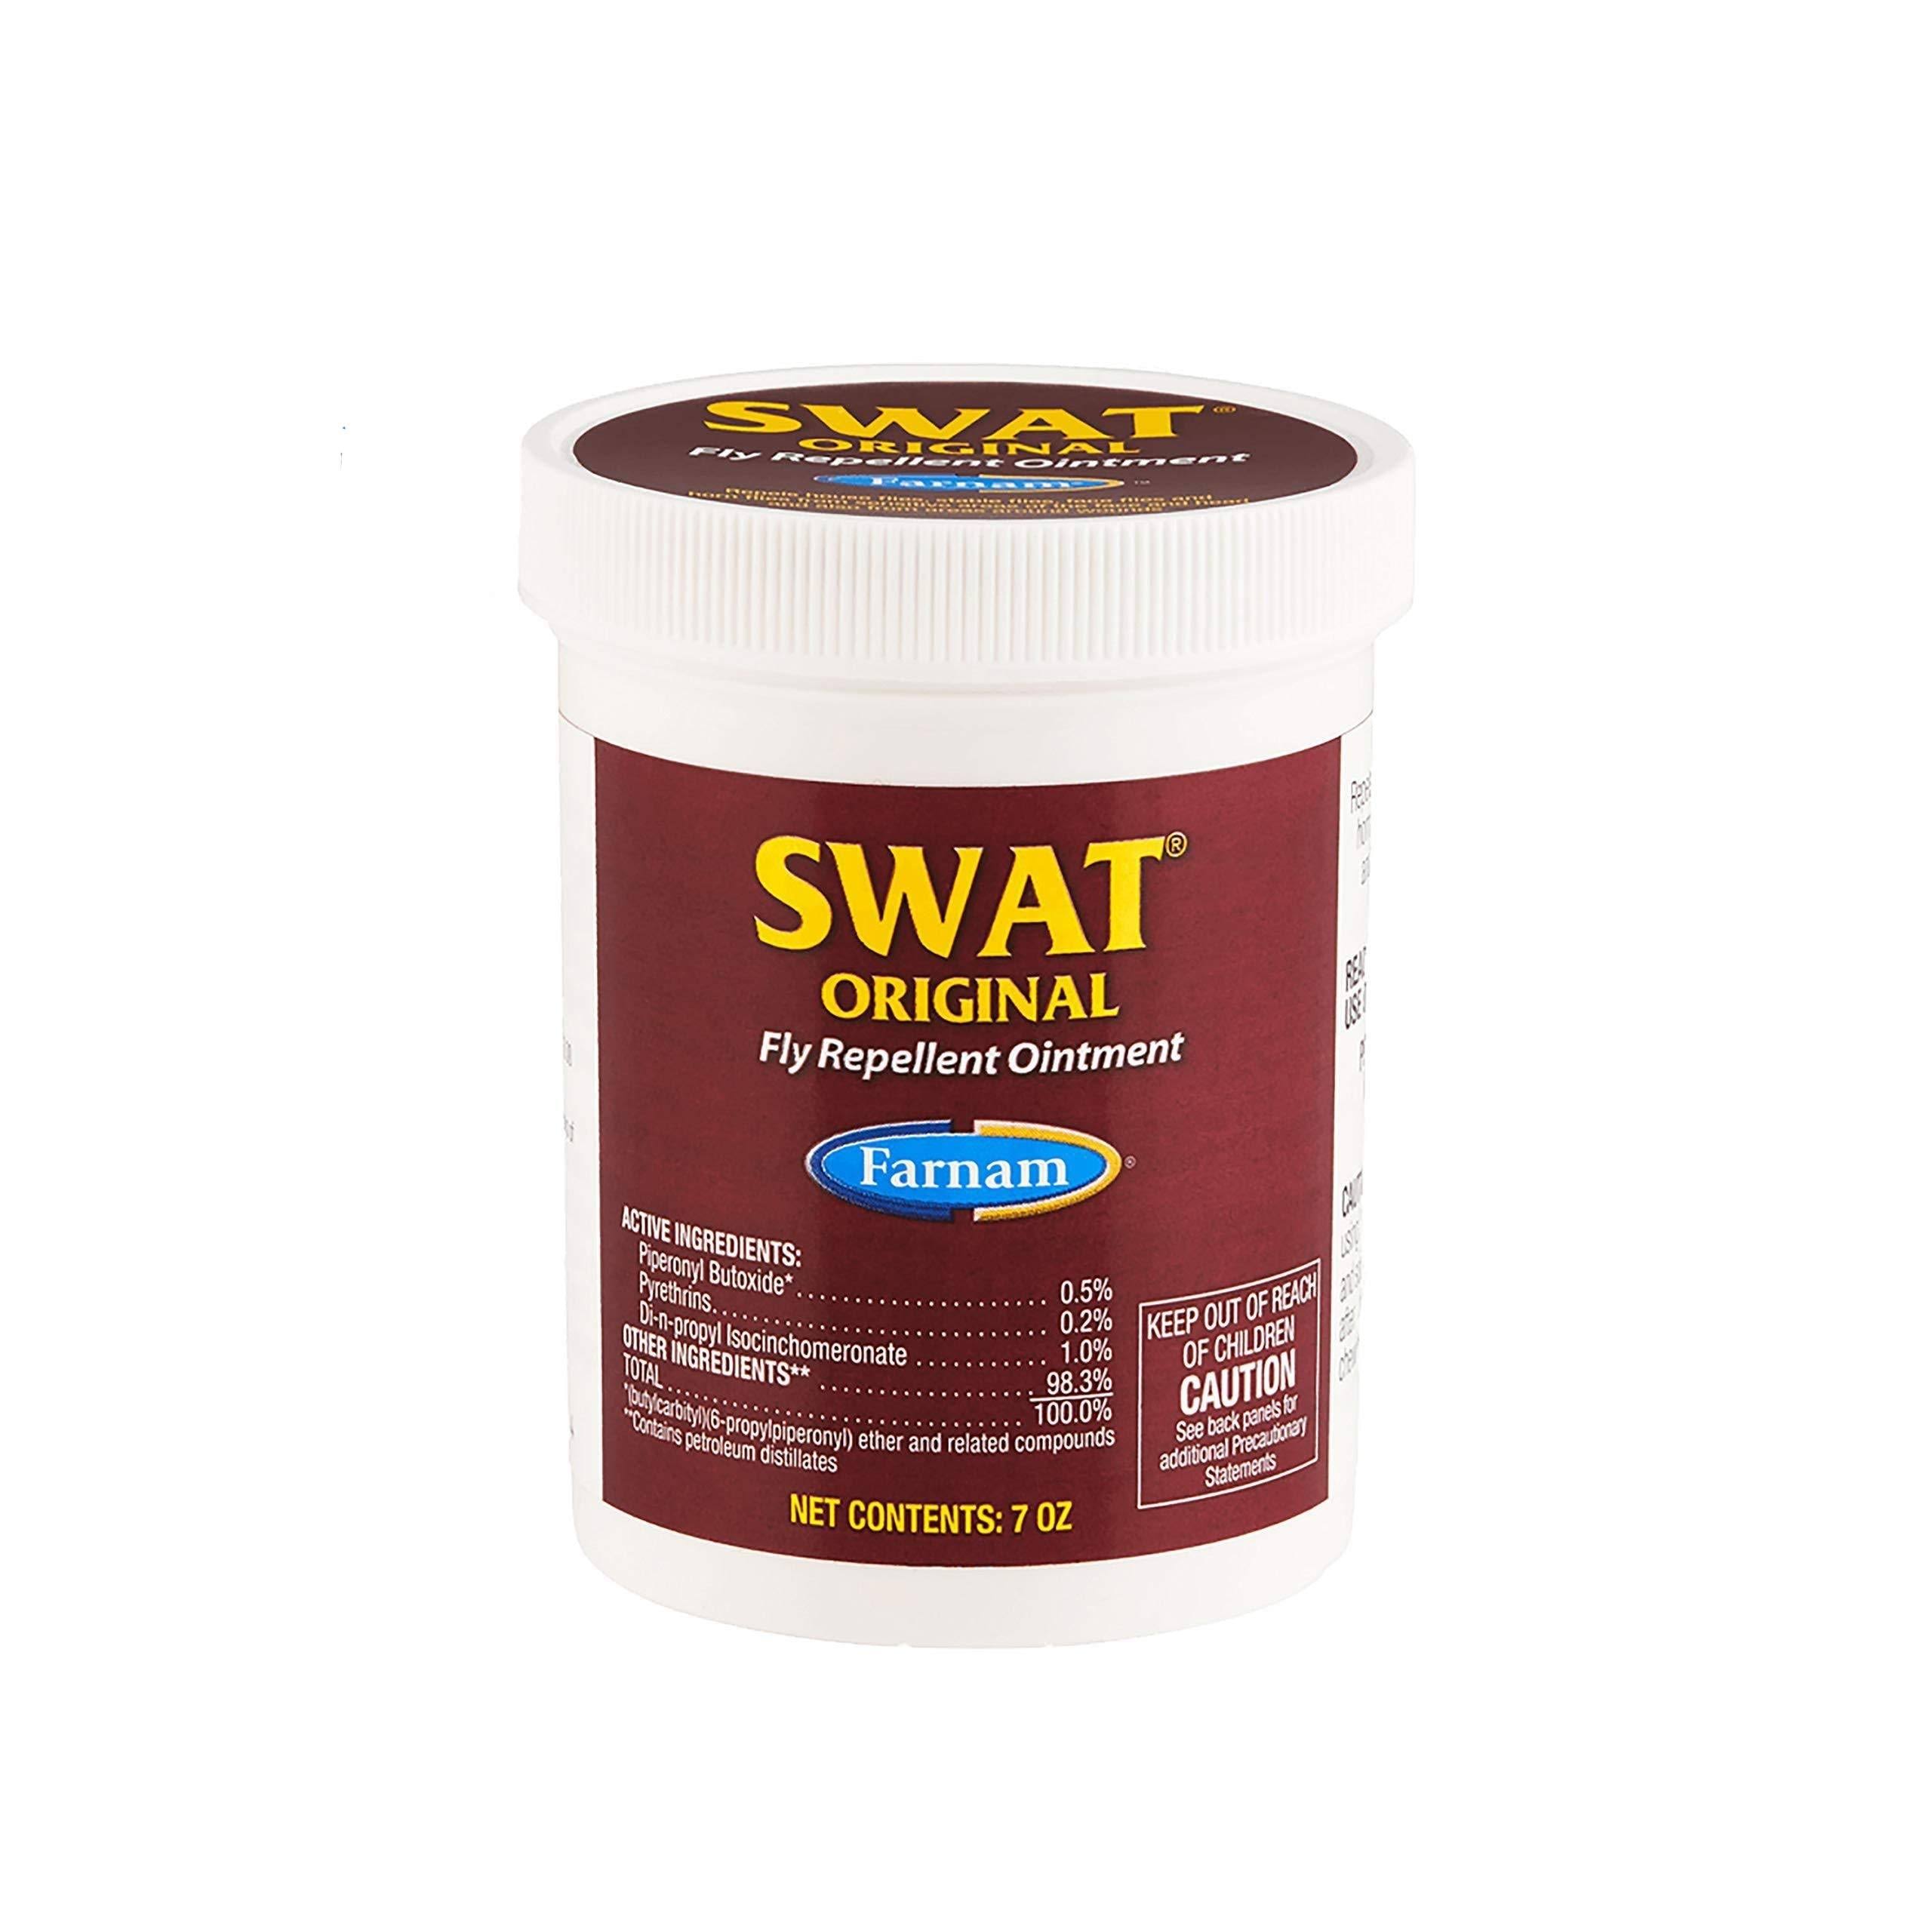 Farnam Swat Original Fly Repellent Ointment